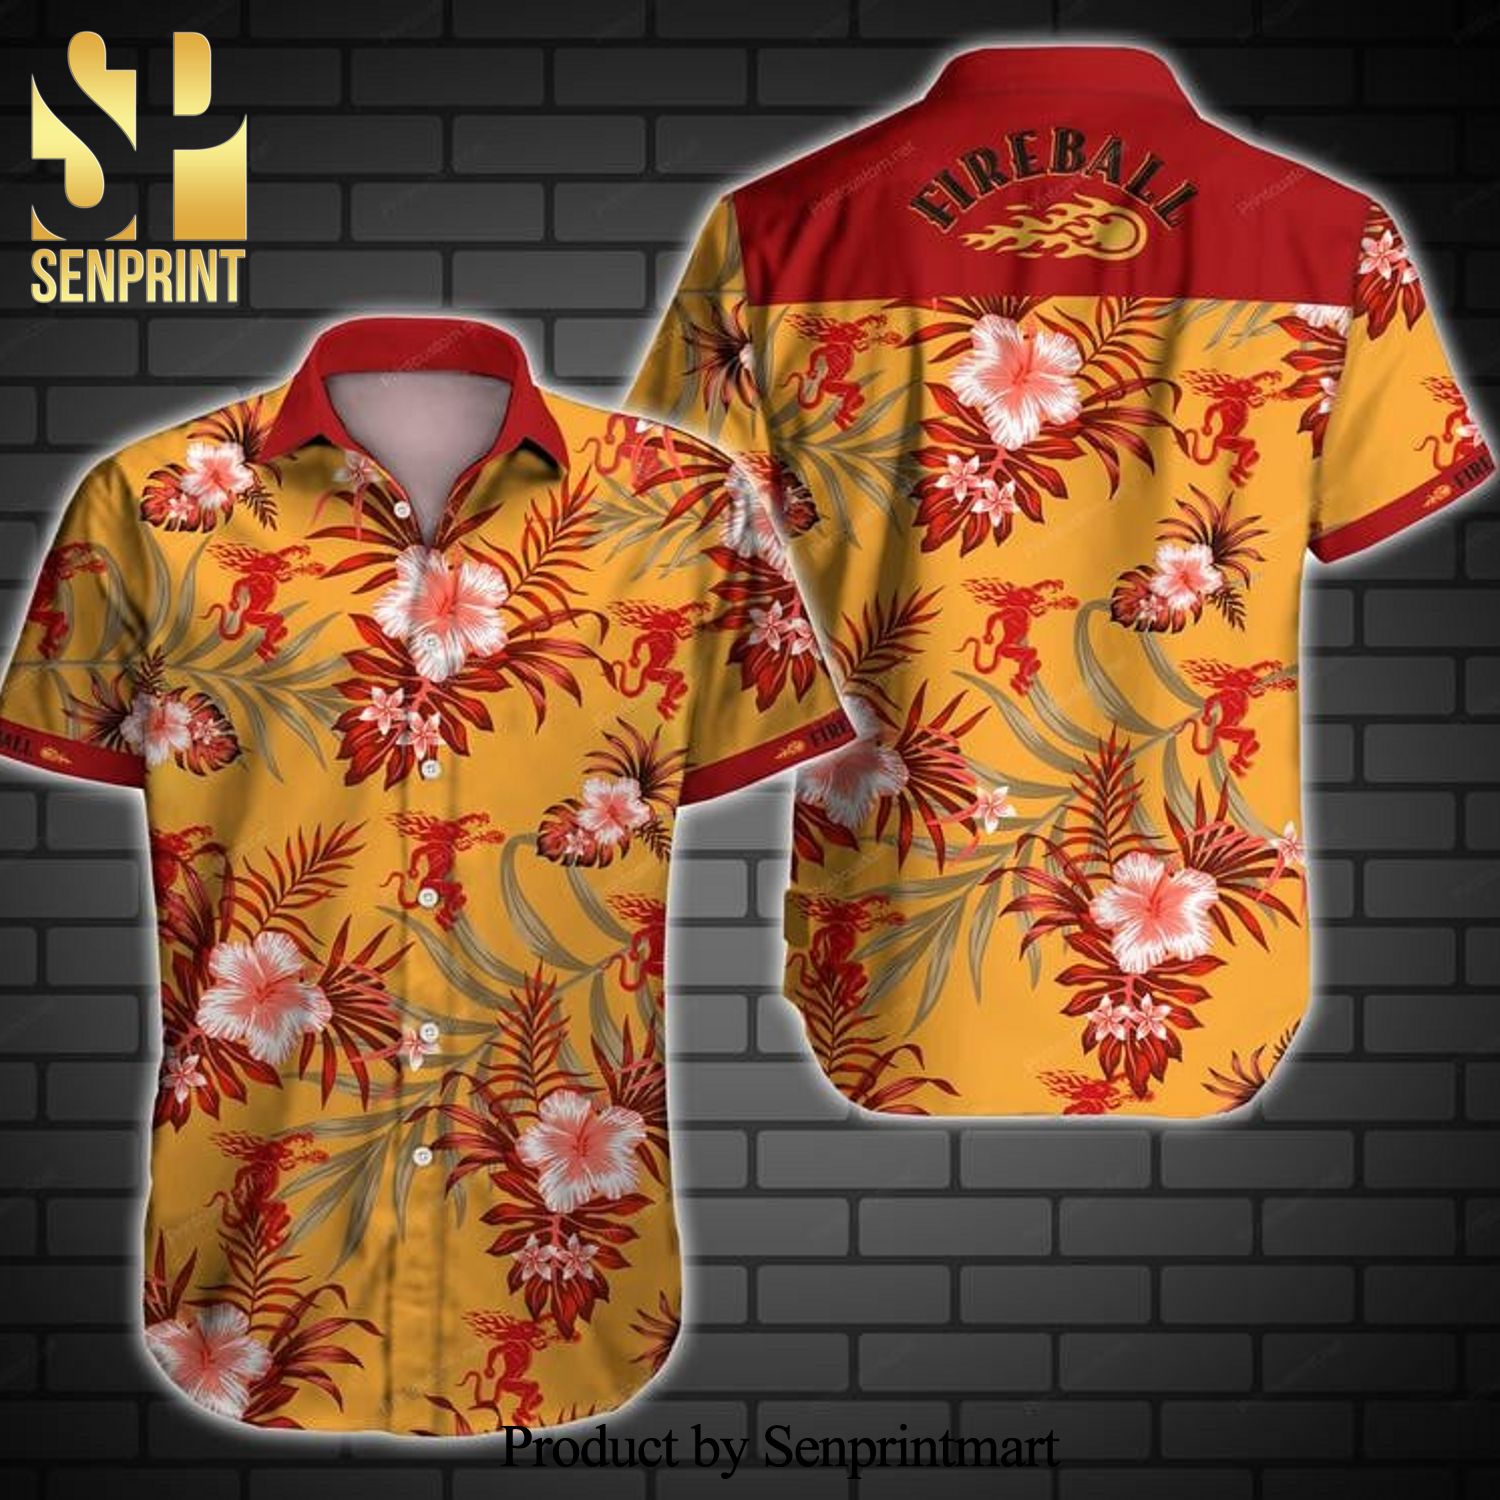 Fireball Whiskey Street Style All Over Print Hawaiian Shirt